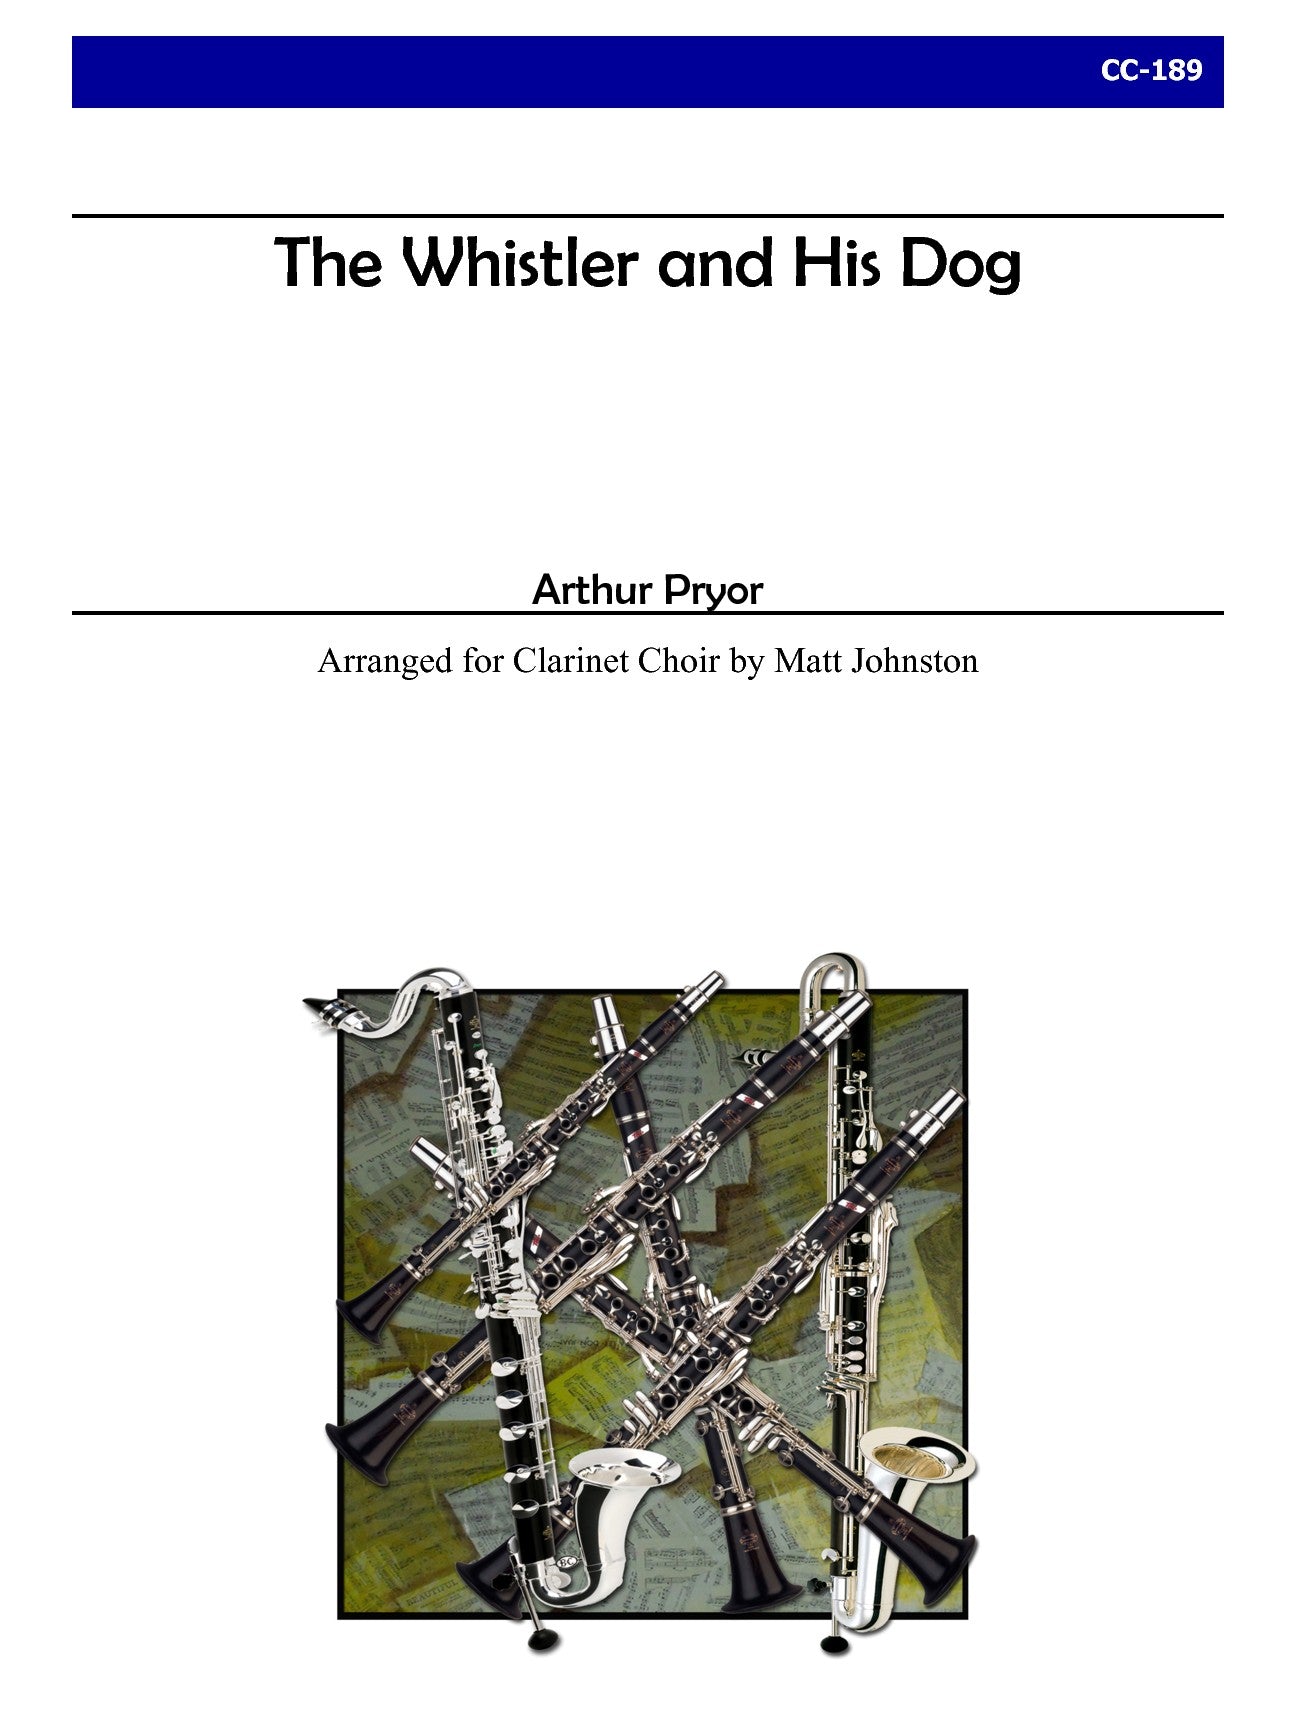 Pryor (arr. Matt Johnston) - The Whistler and His Dog for Clarinet Choir